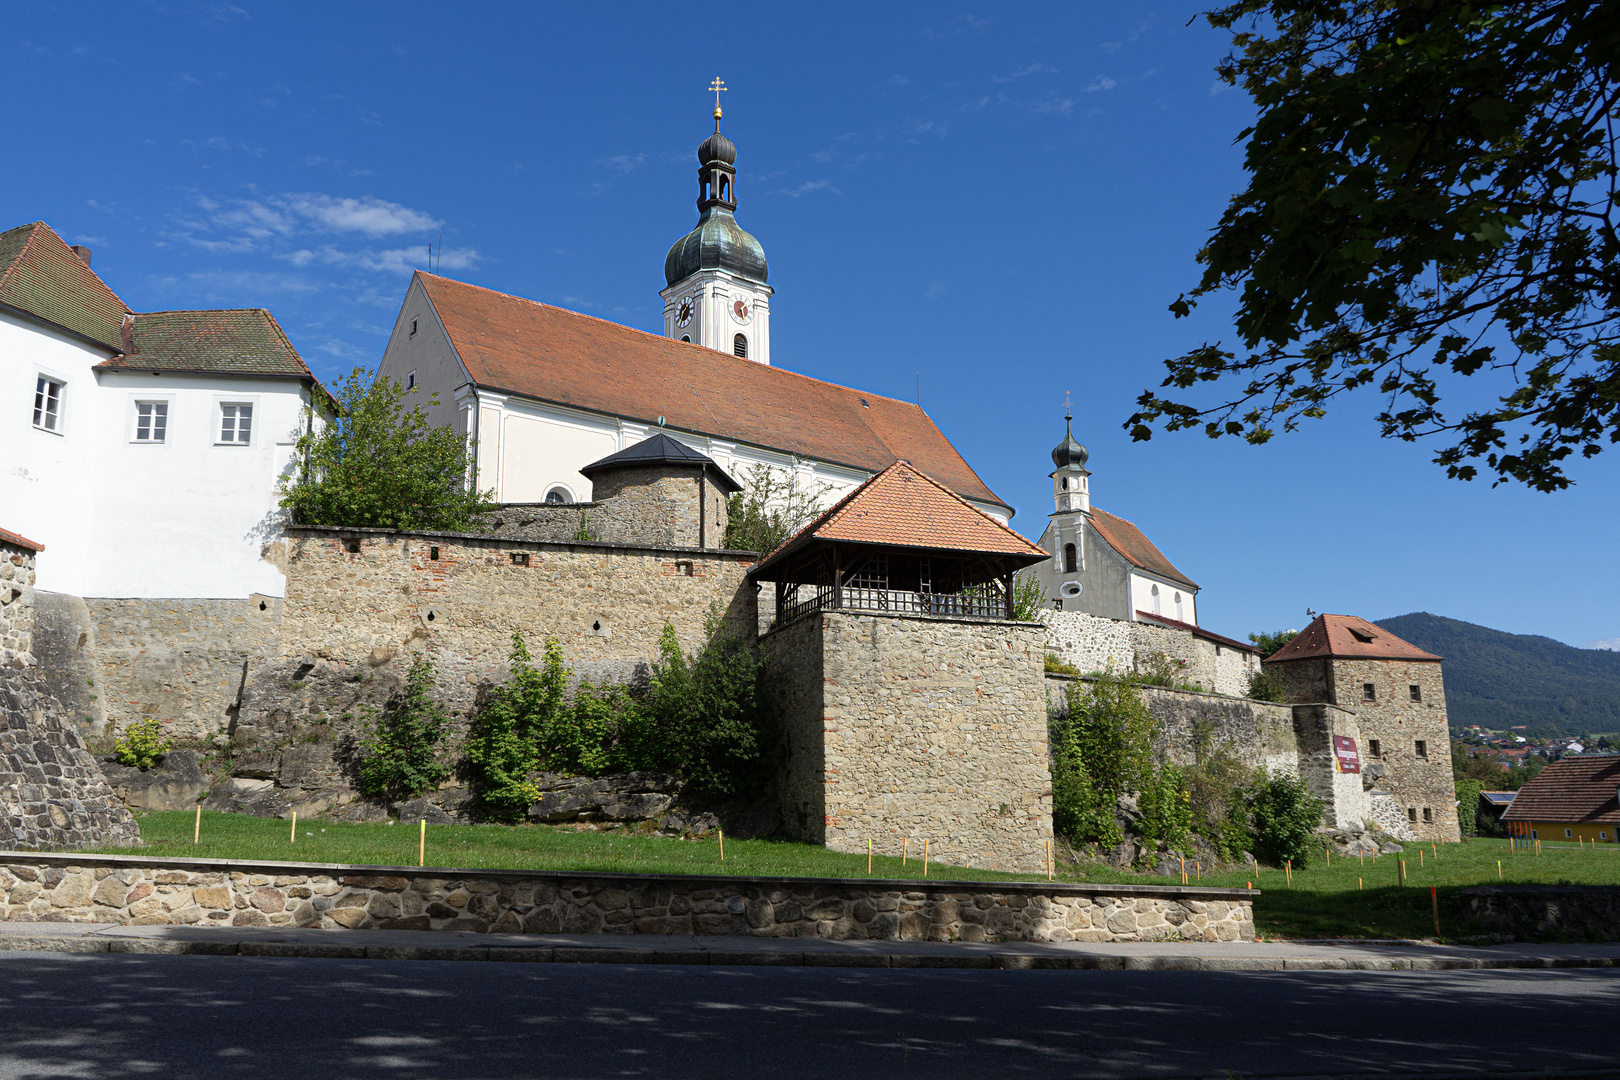  Kirchenburg Bad Kötzting